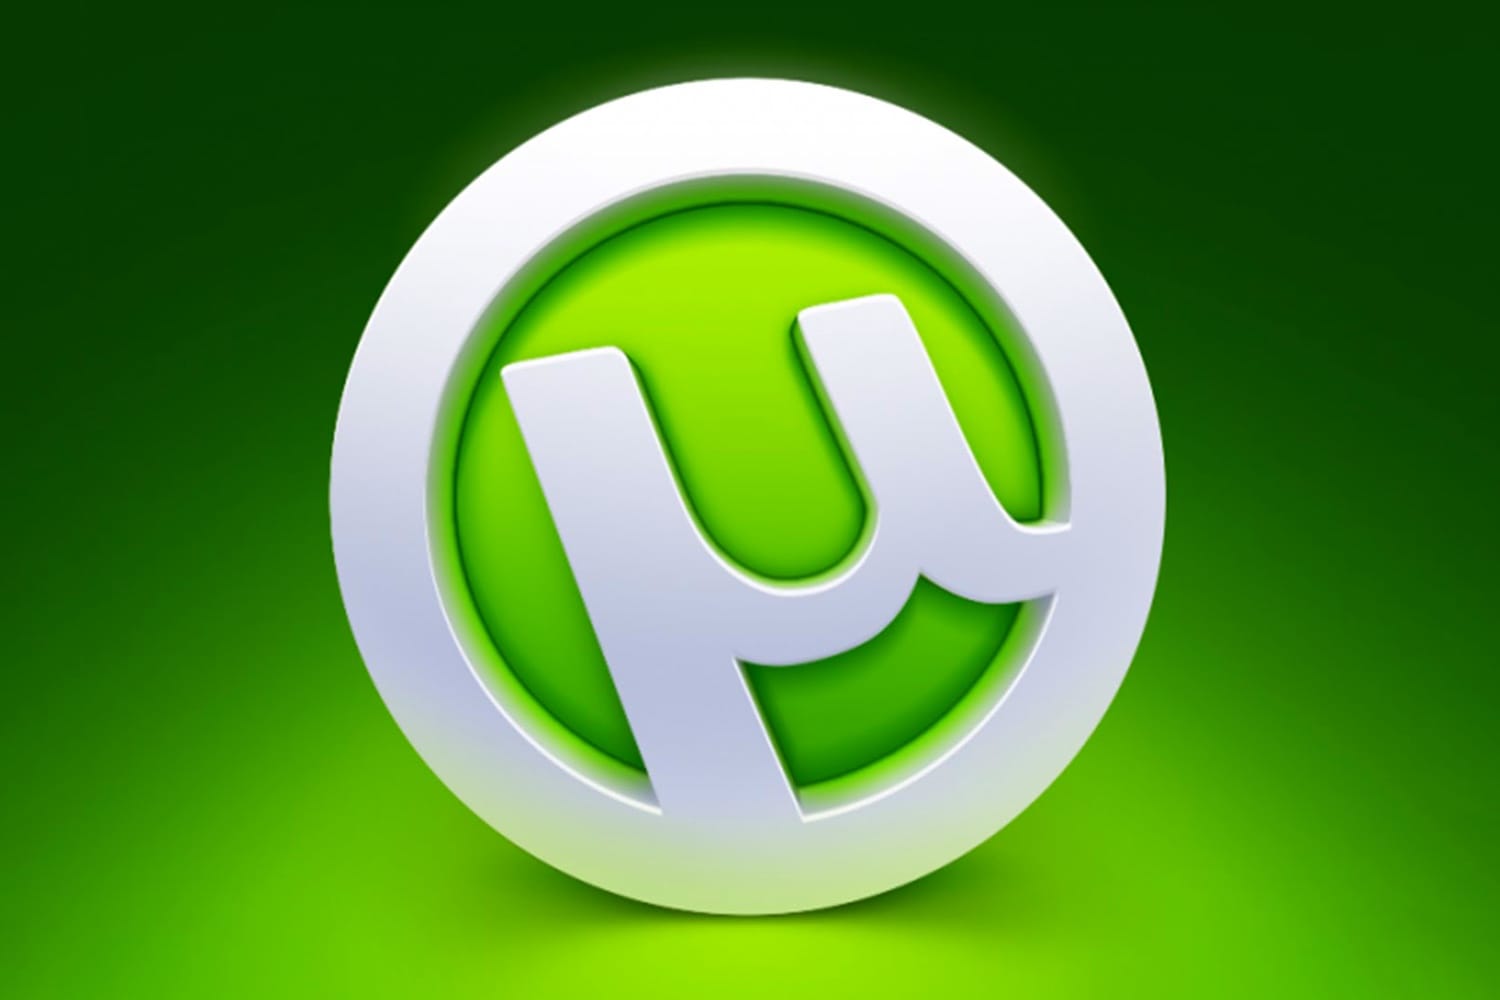 Www utorrent com intl. Иконка торрента. Utorrent логотип. Ярлык utorrent. Трент.